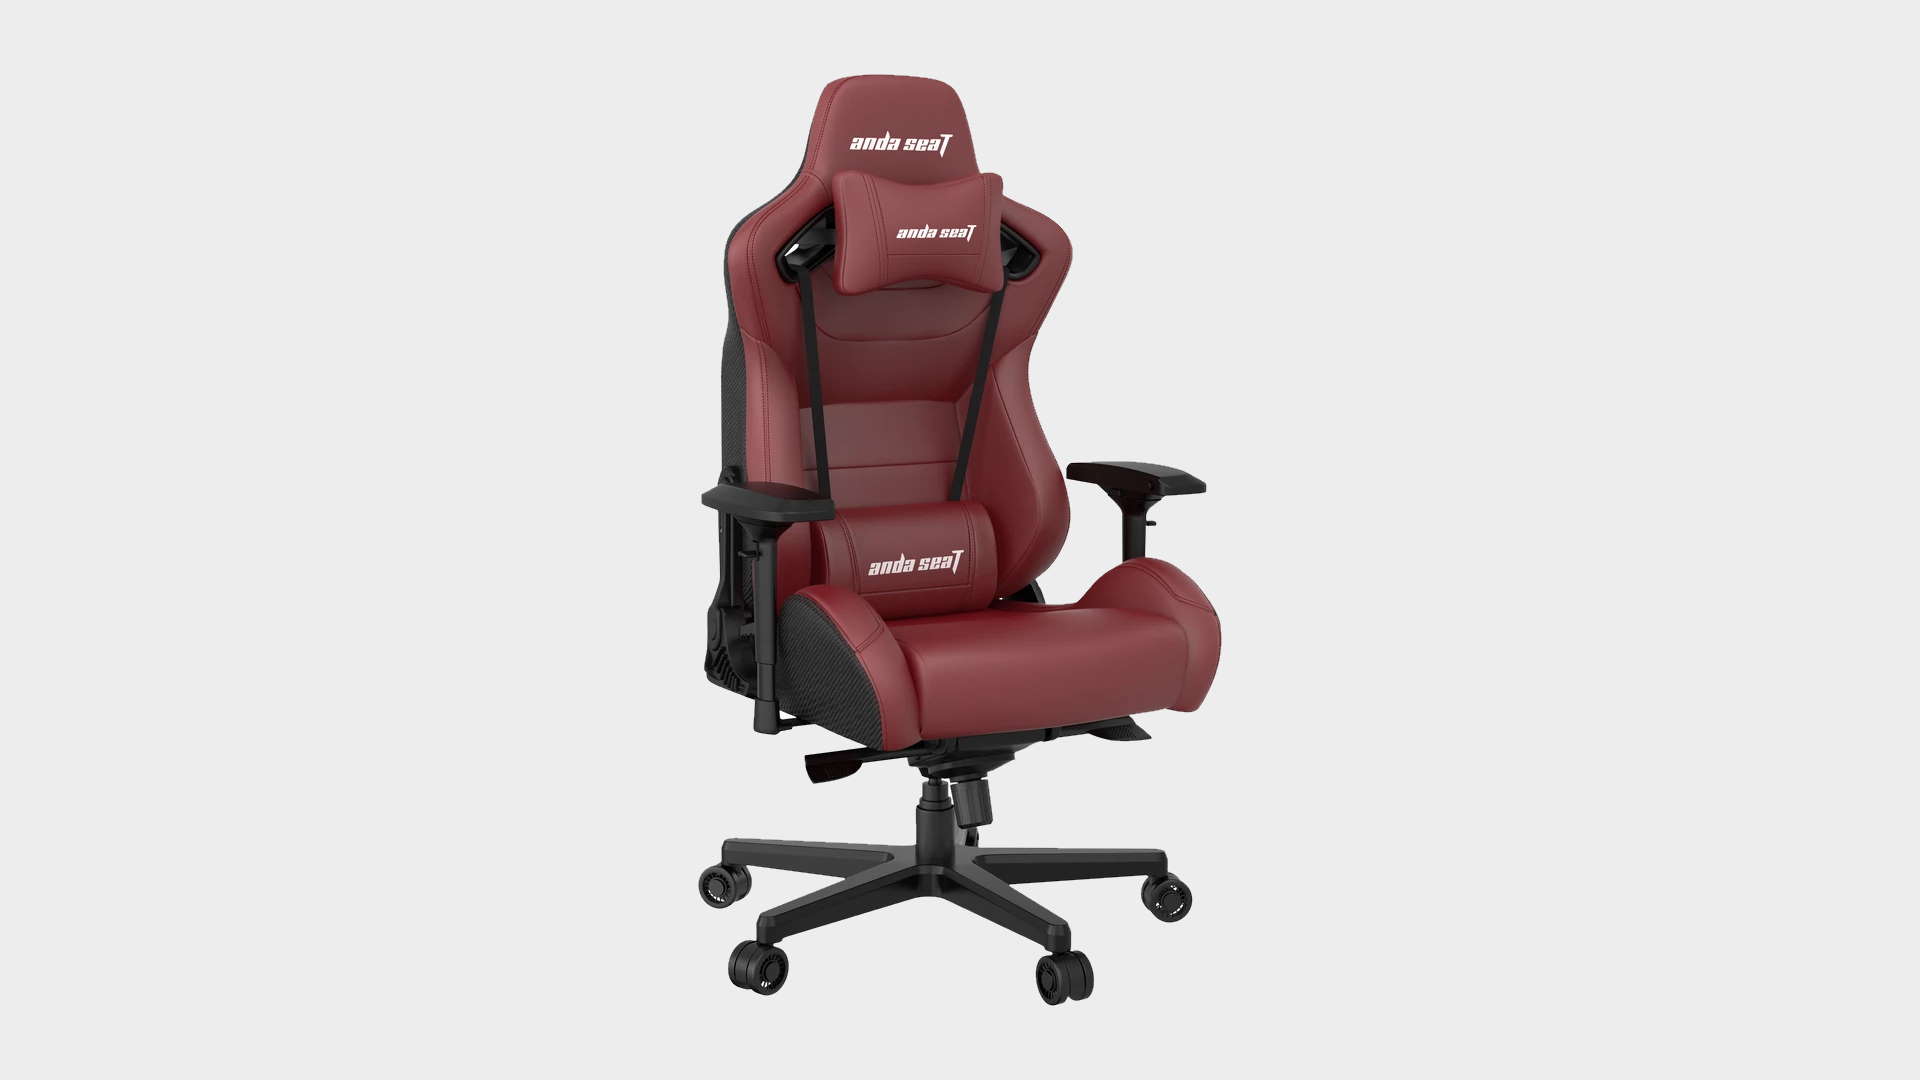 AndaSeat Kaiser 2 gaming chair in maroon